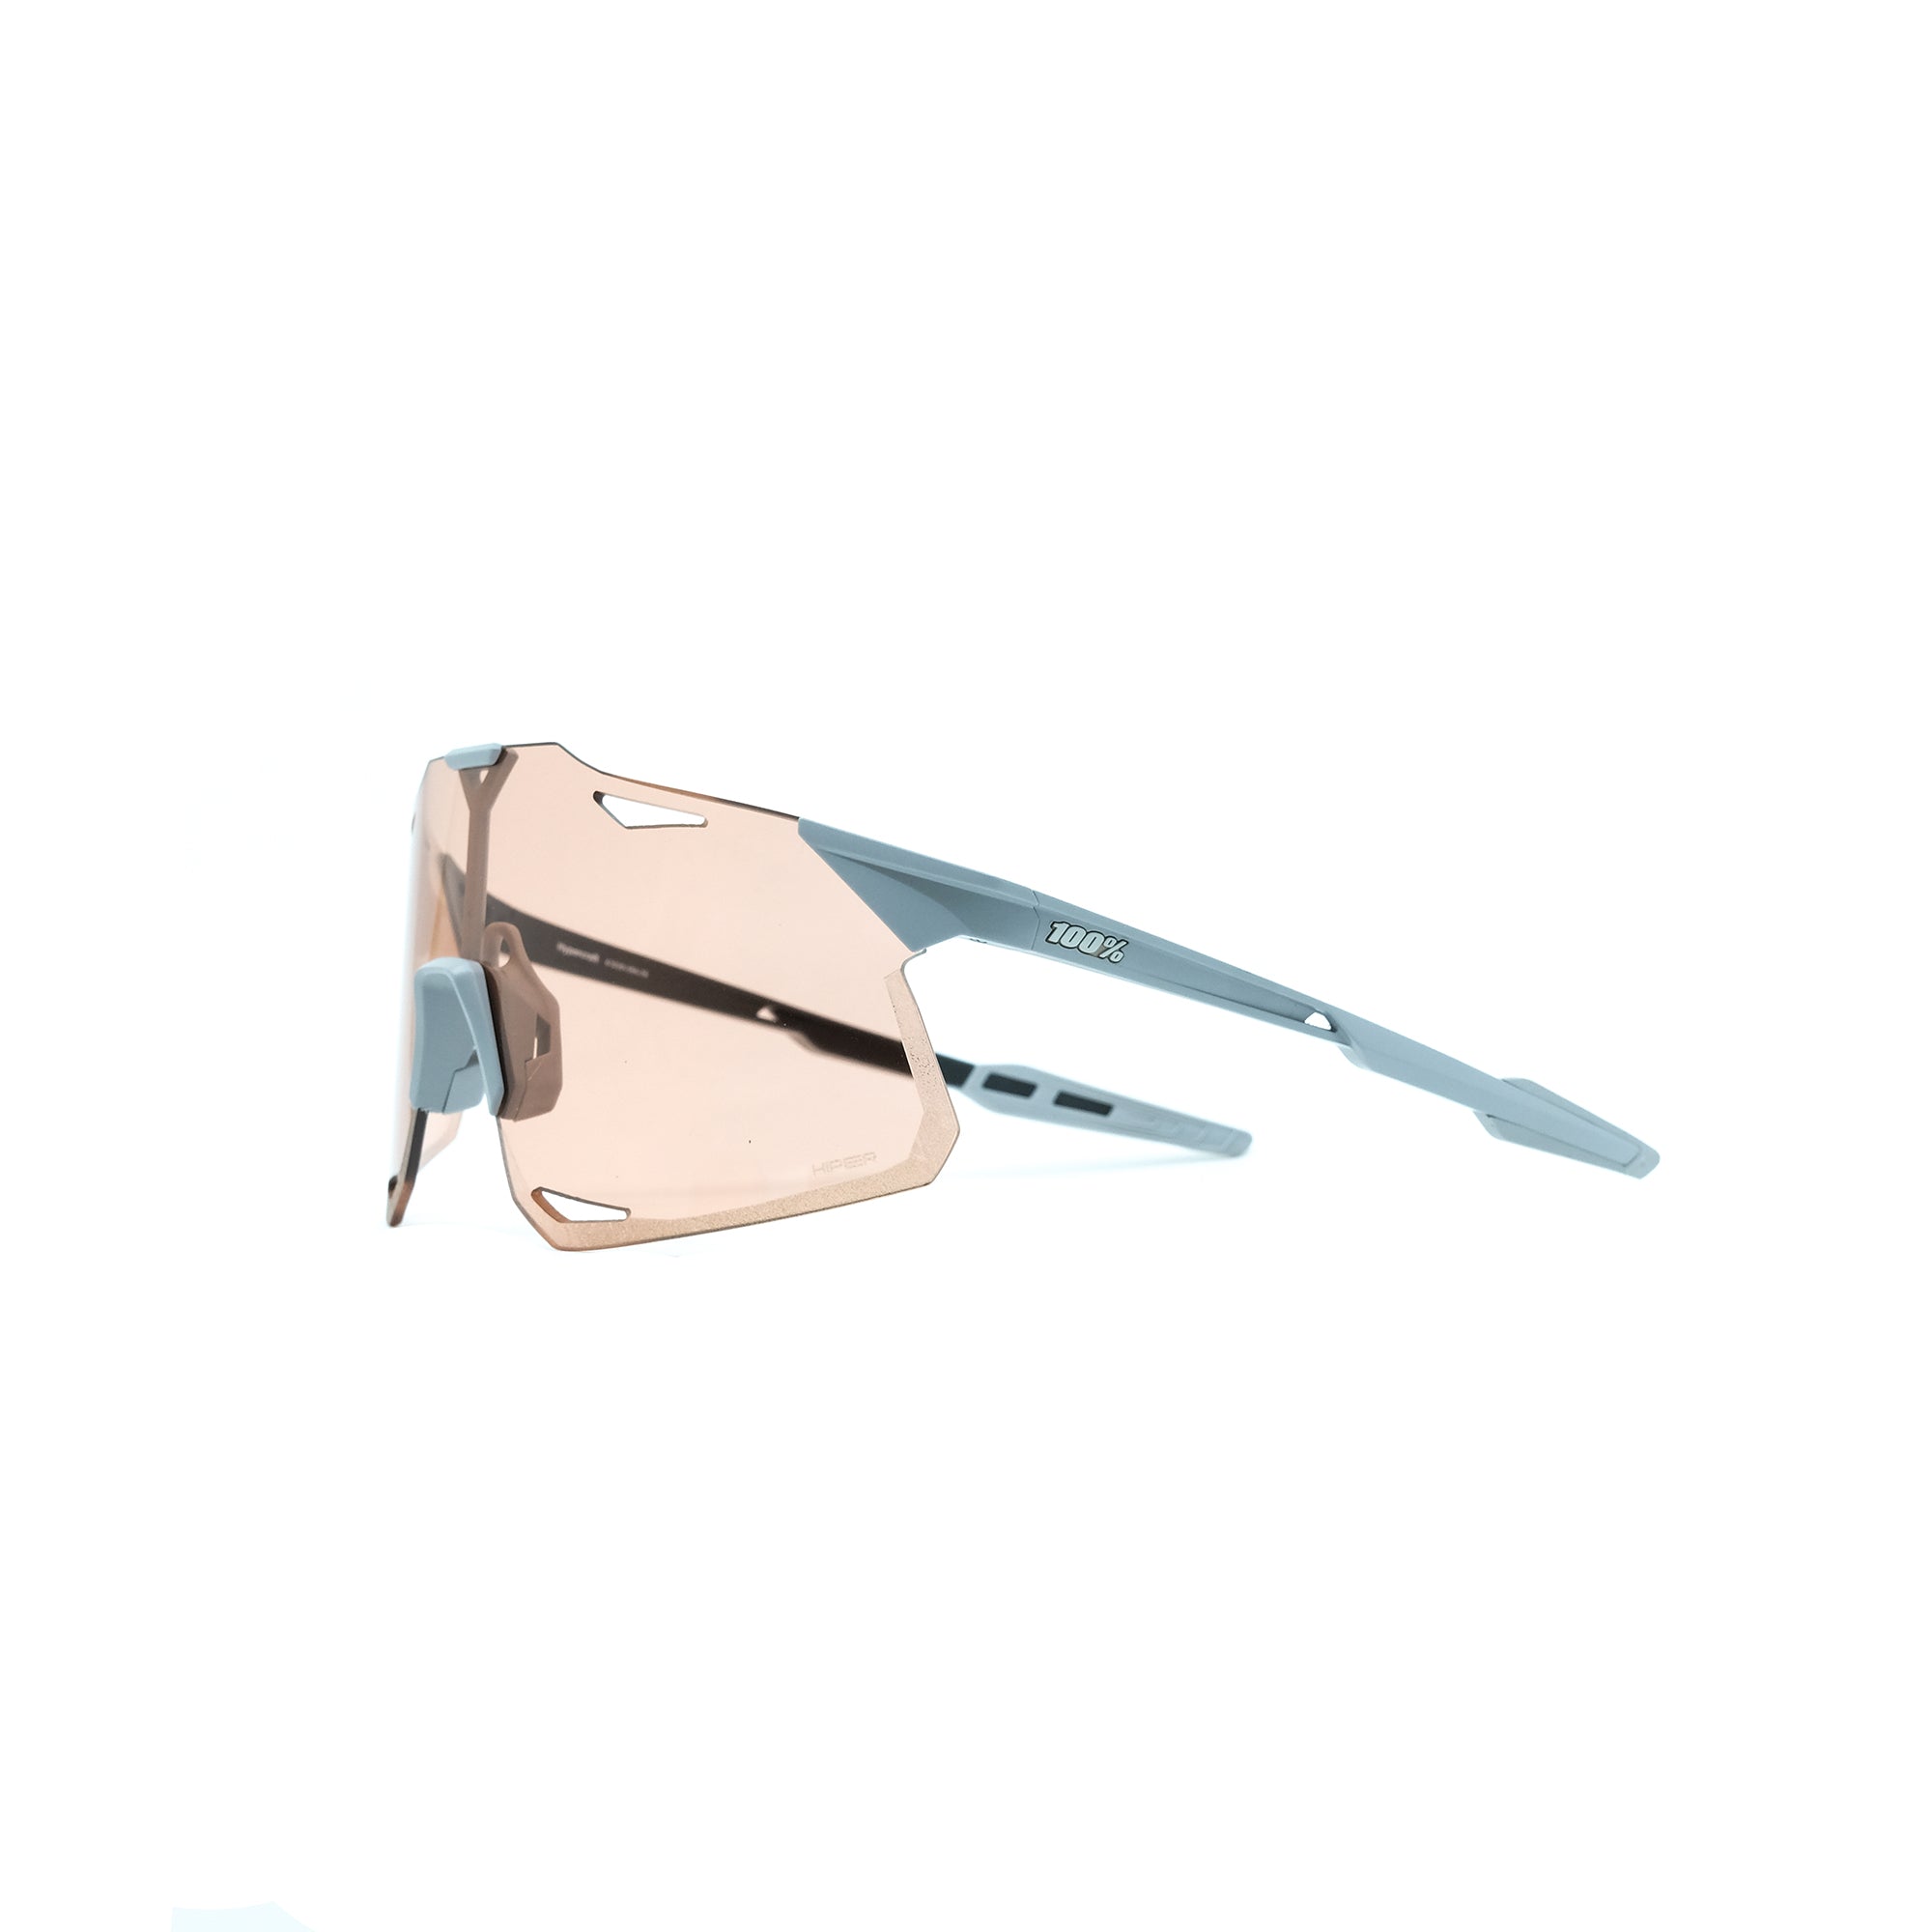 100% Hypercraft Sunglasses - Matte Stone Grey (HiPer Coral Lens)